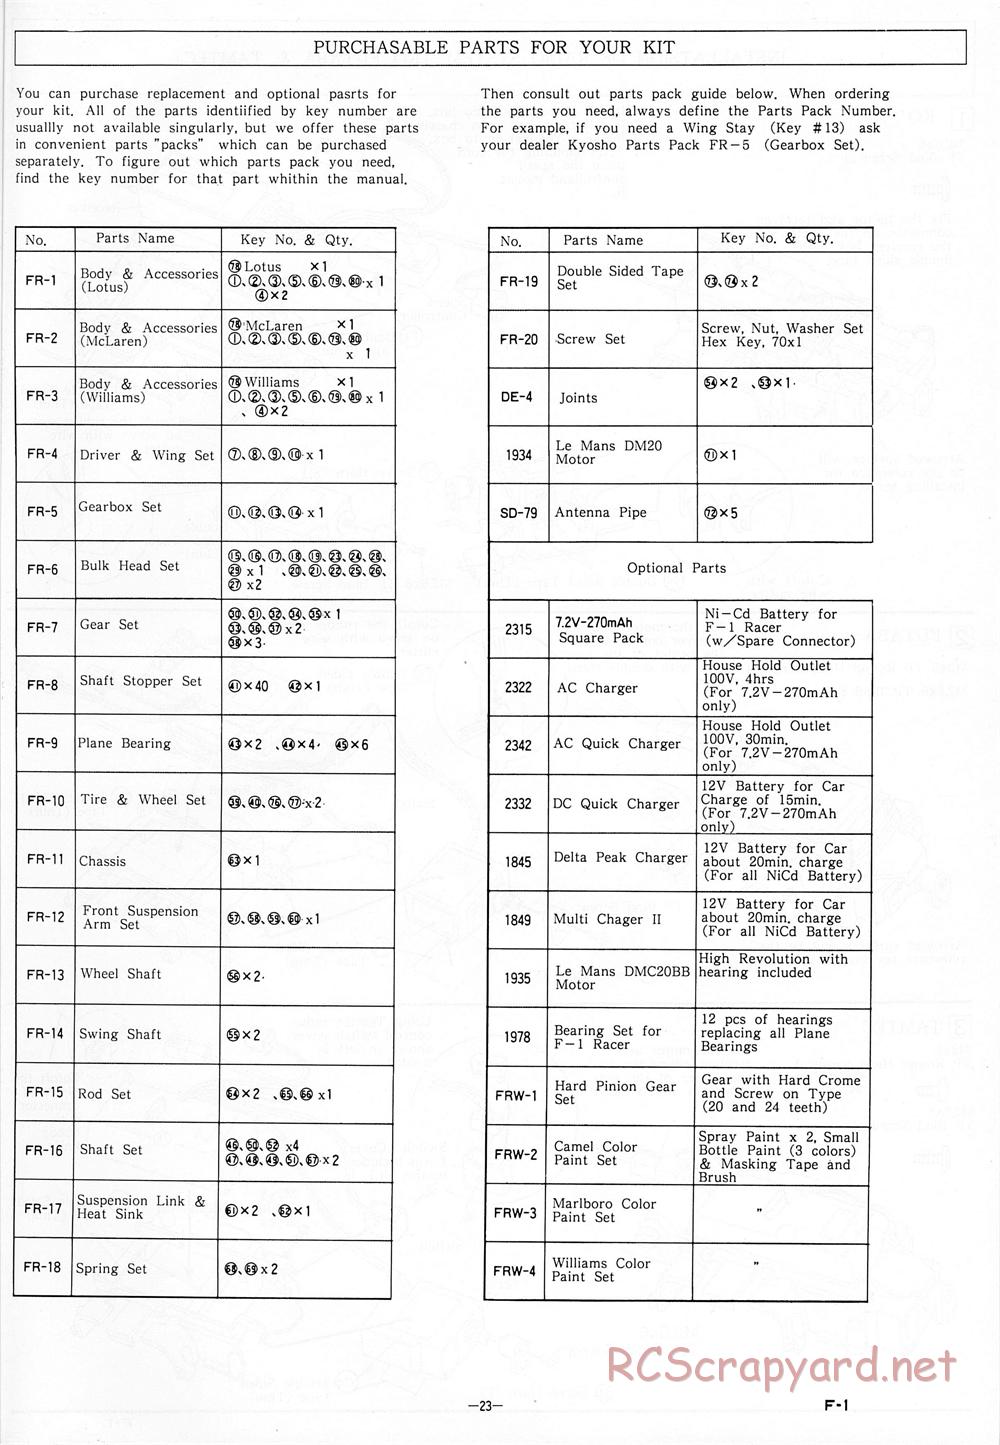 Kyosho - 1/18 Scale Formula One (F1) - Manual - Page 23